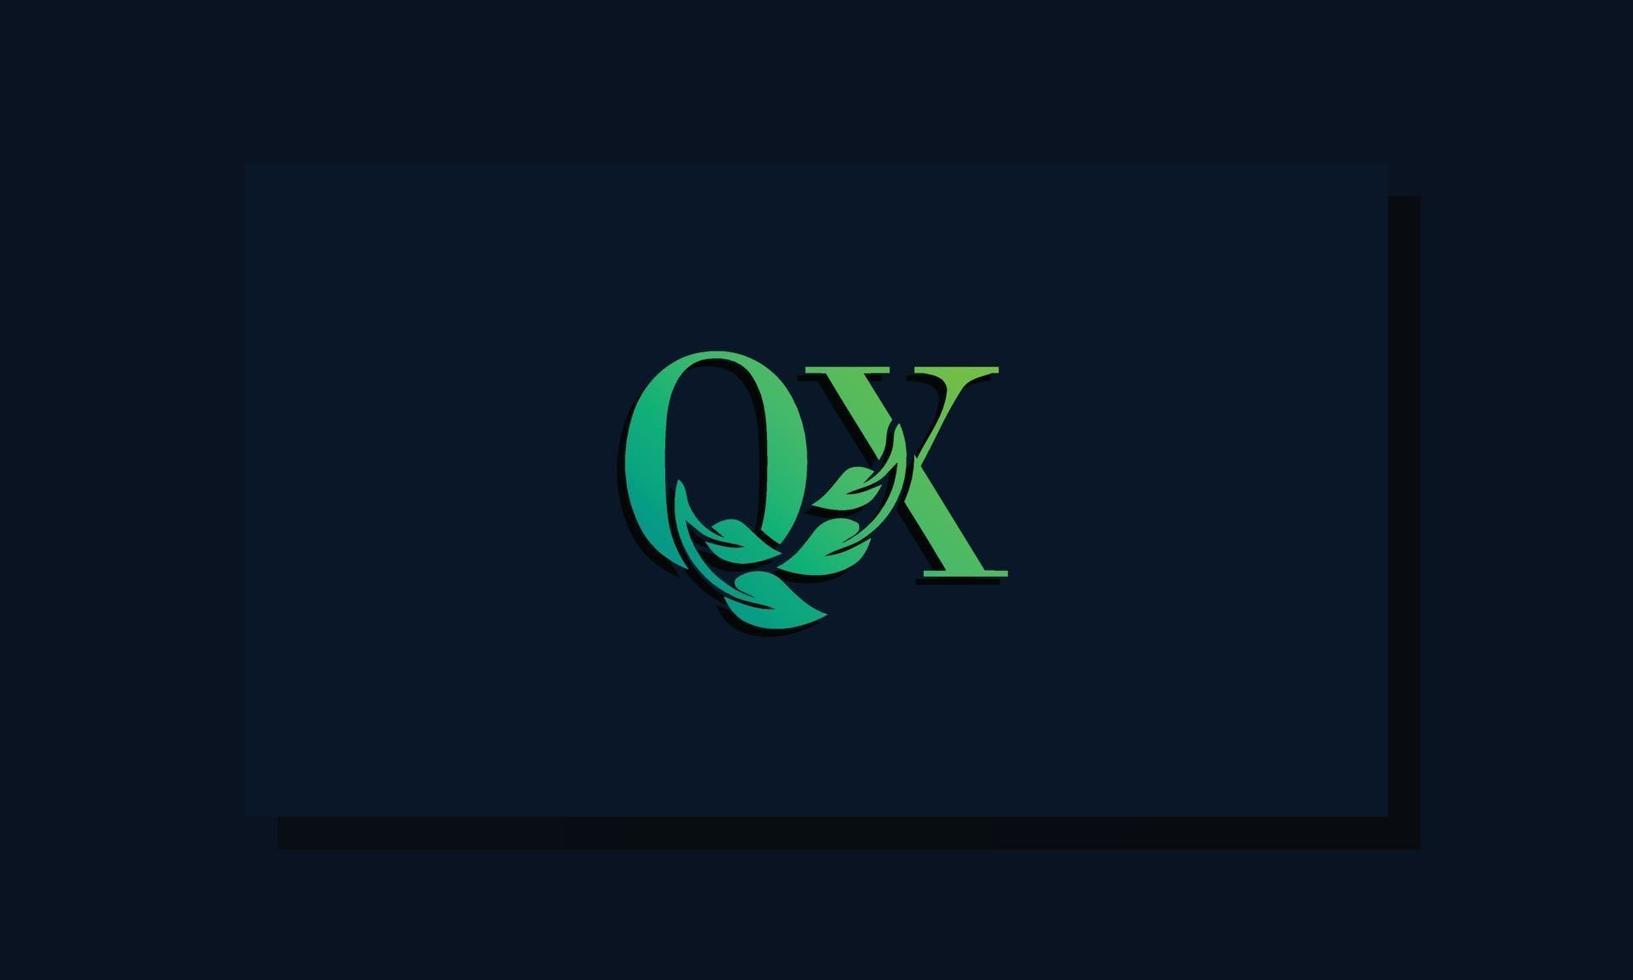 logo qx iniziale in stile foglia minimal vettore